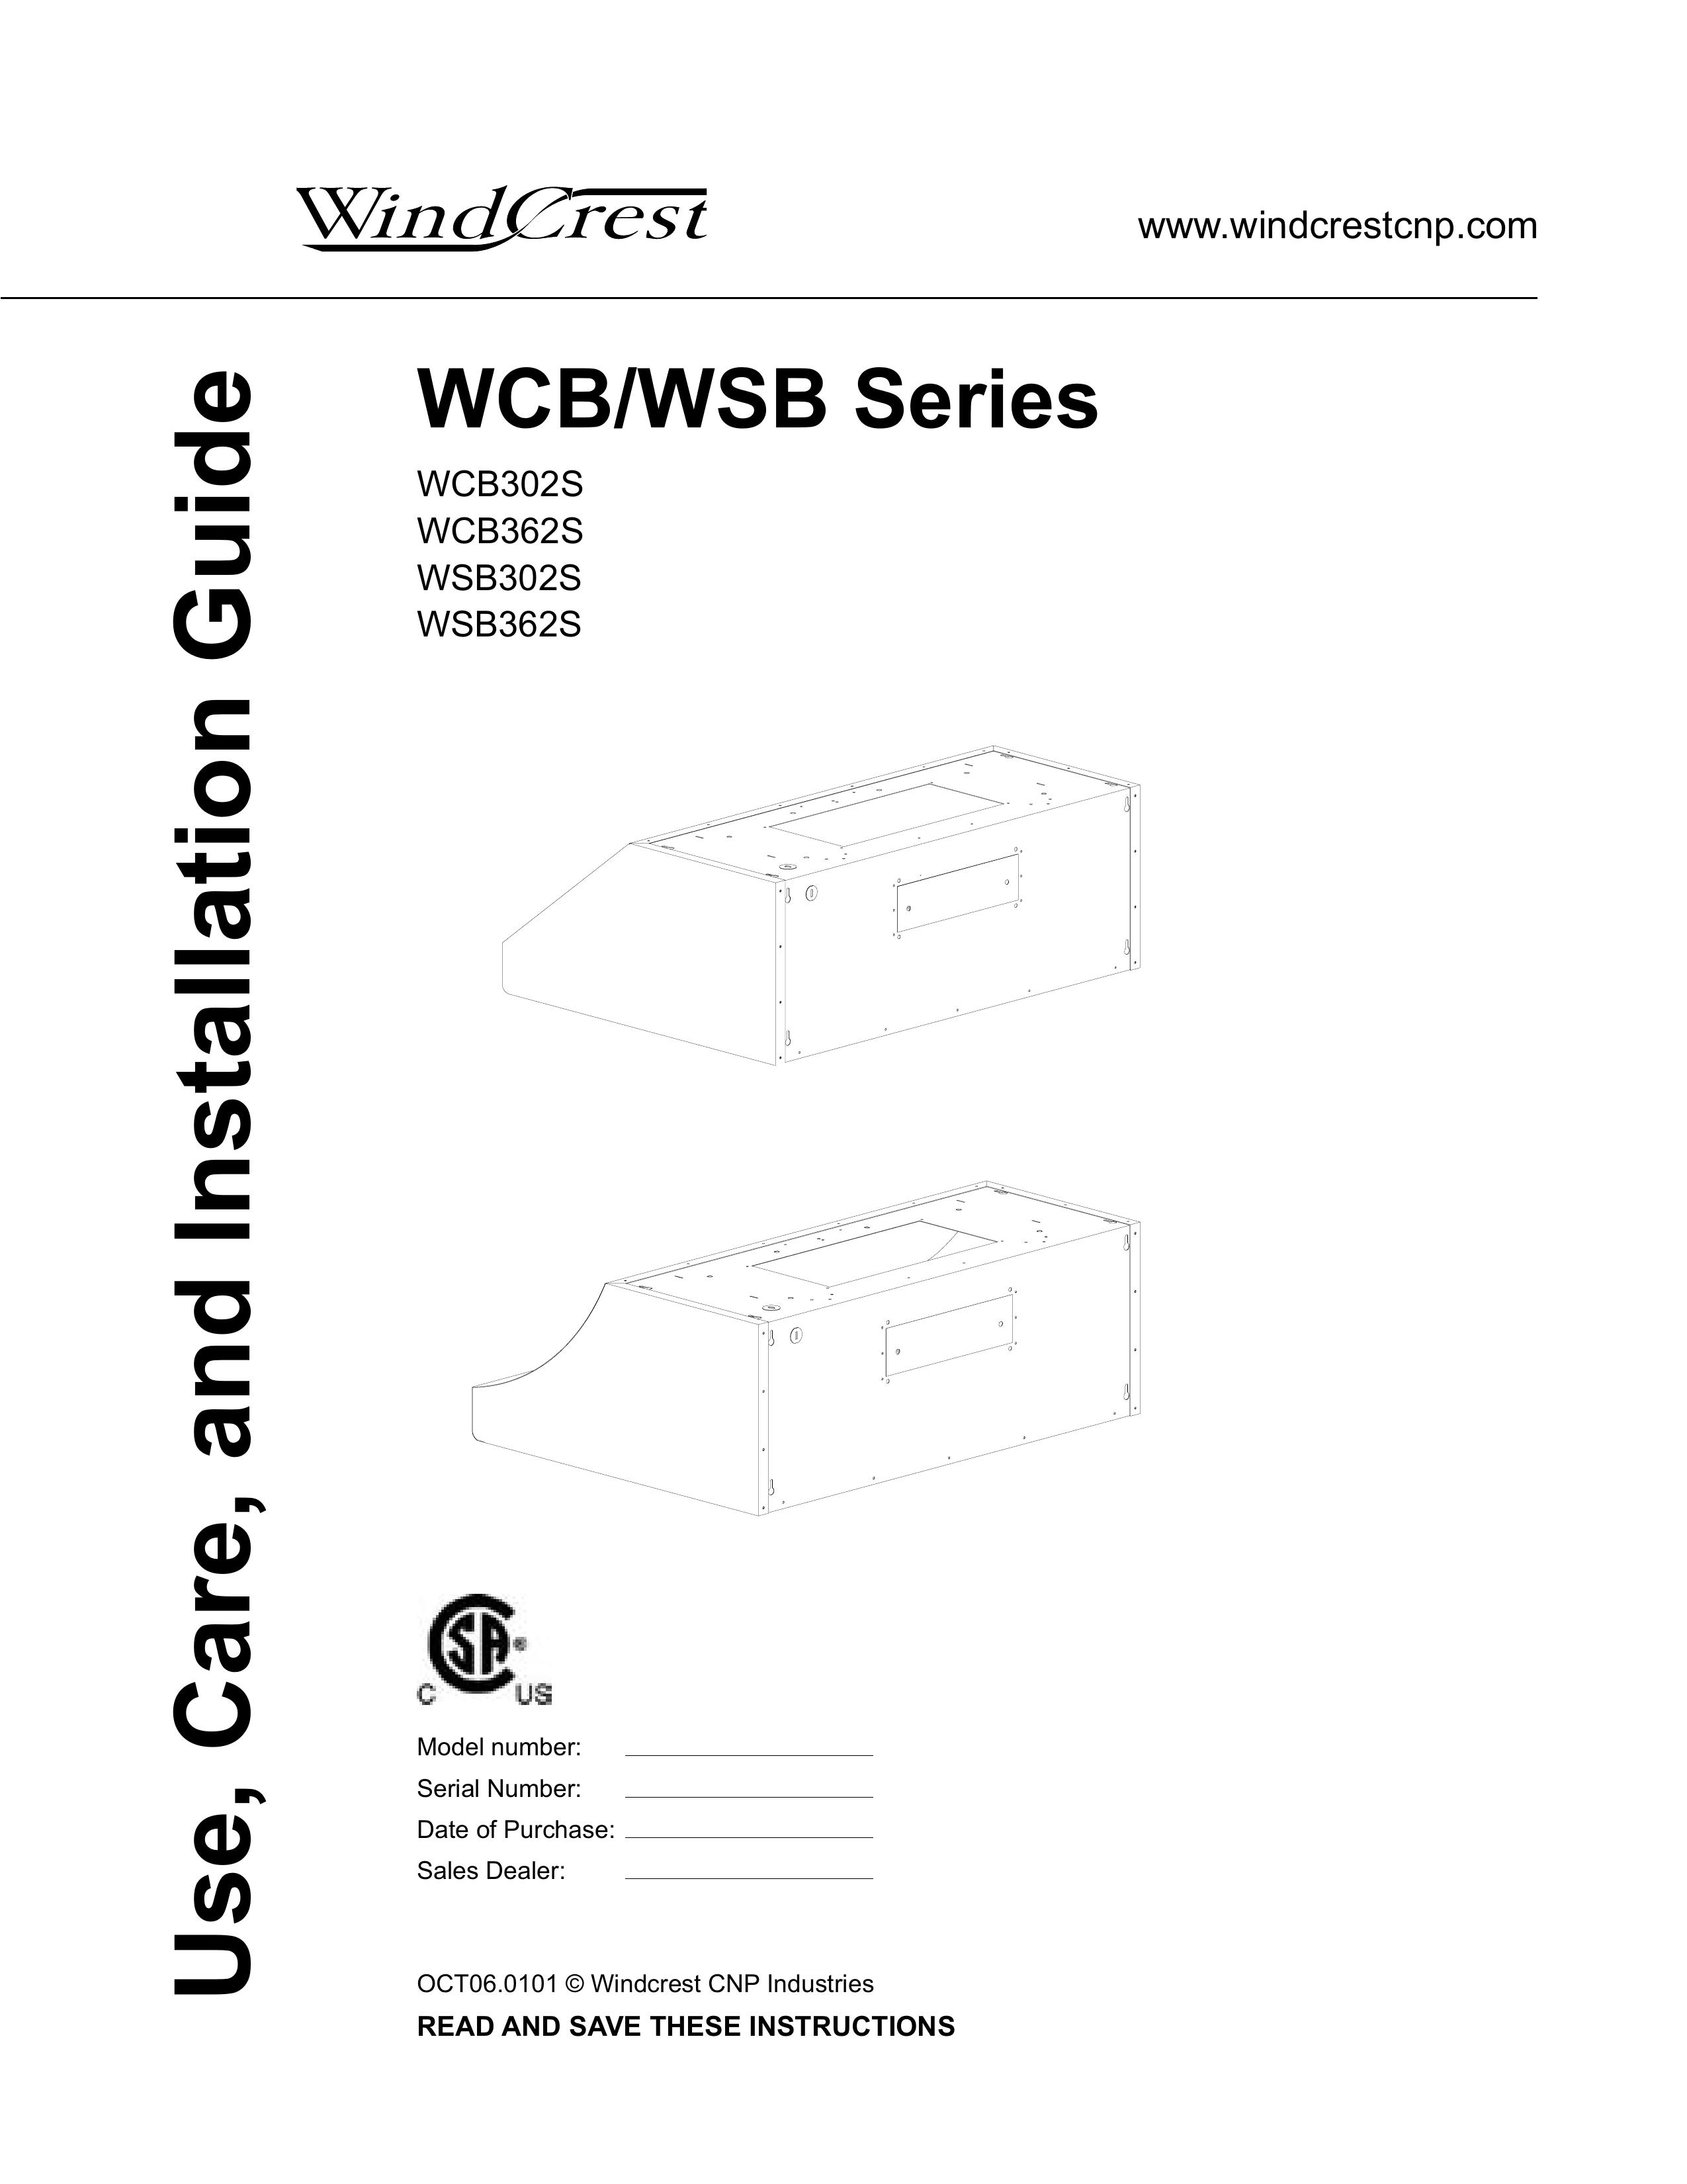 Wind Crest WSB362S Ventilation Hood User Manual